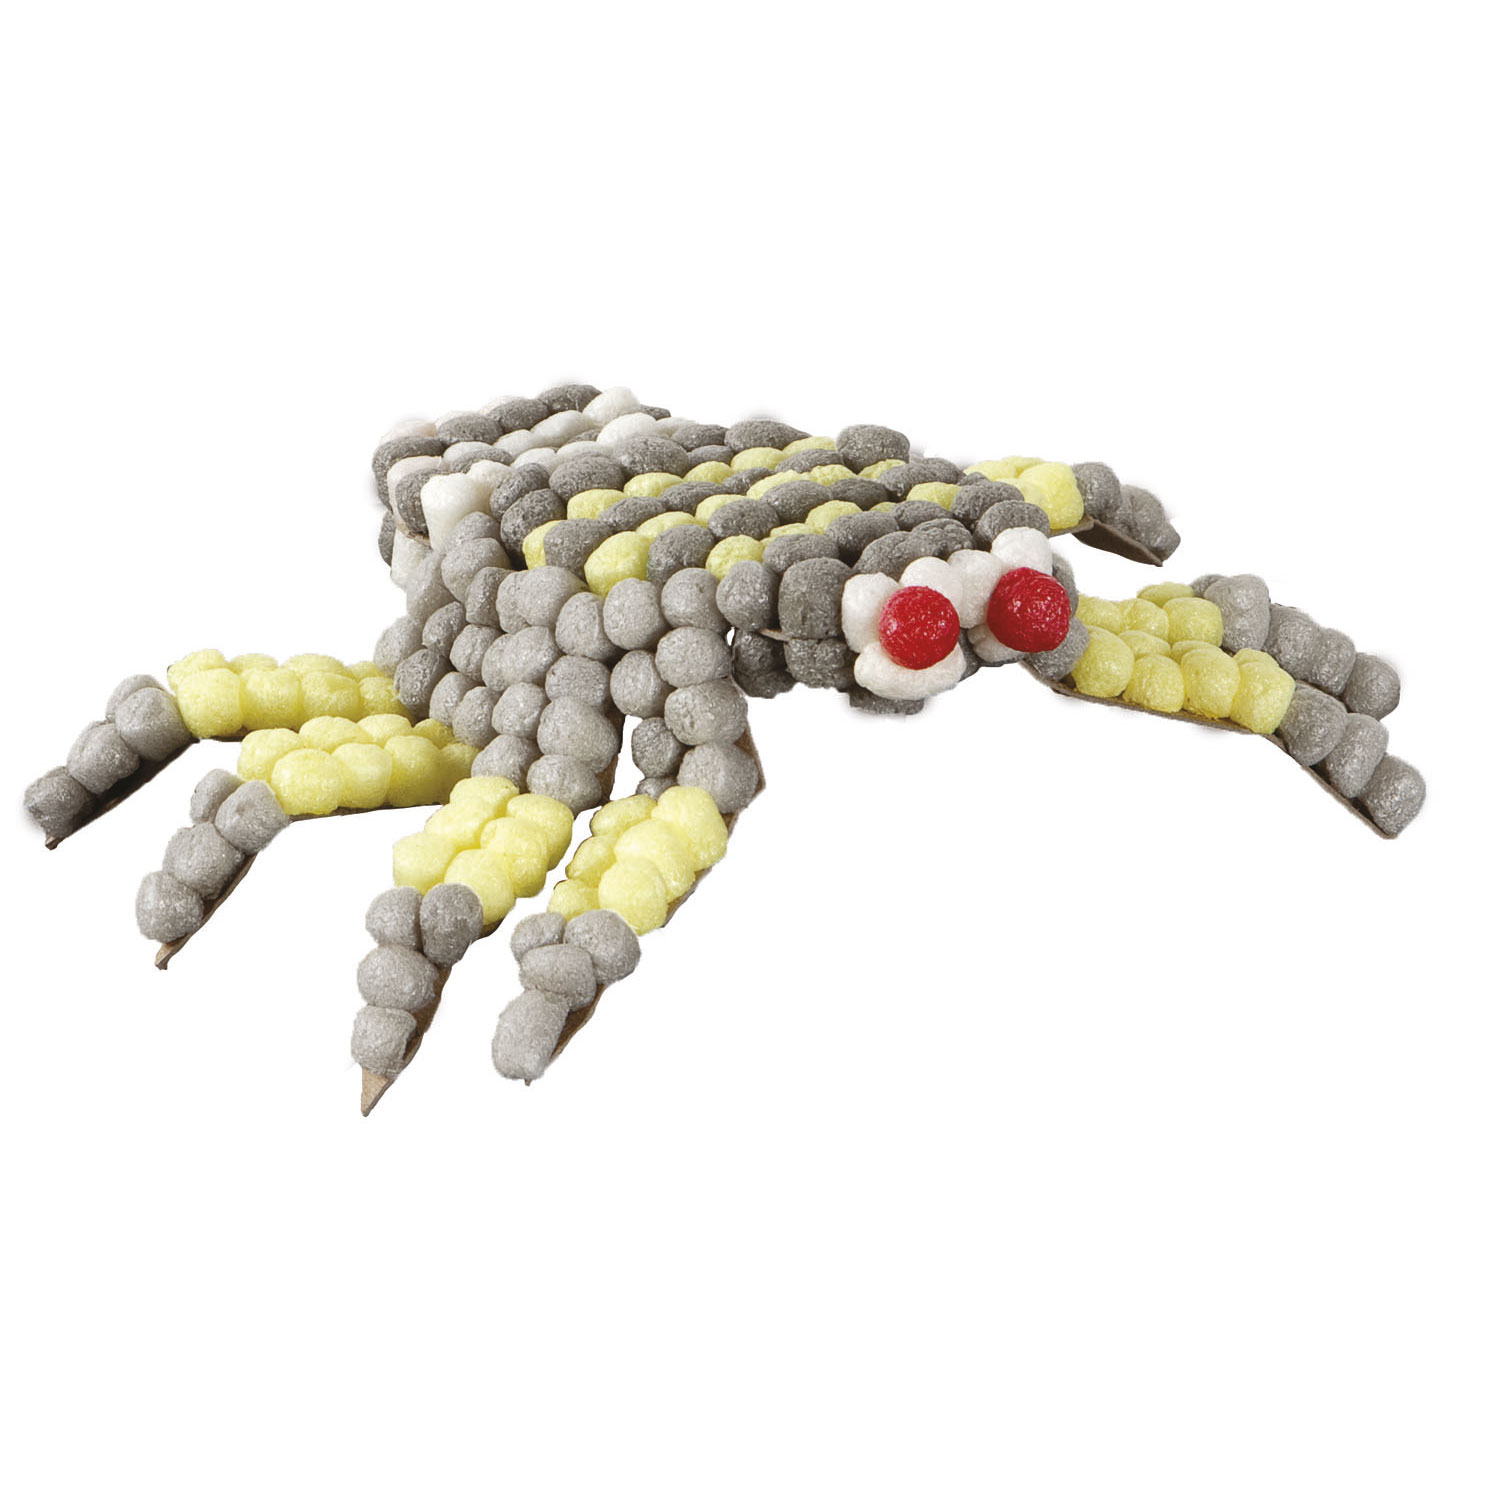 Playmais Mosaik 3D Insektendekorationen, 24 Stk.